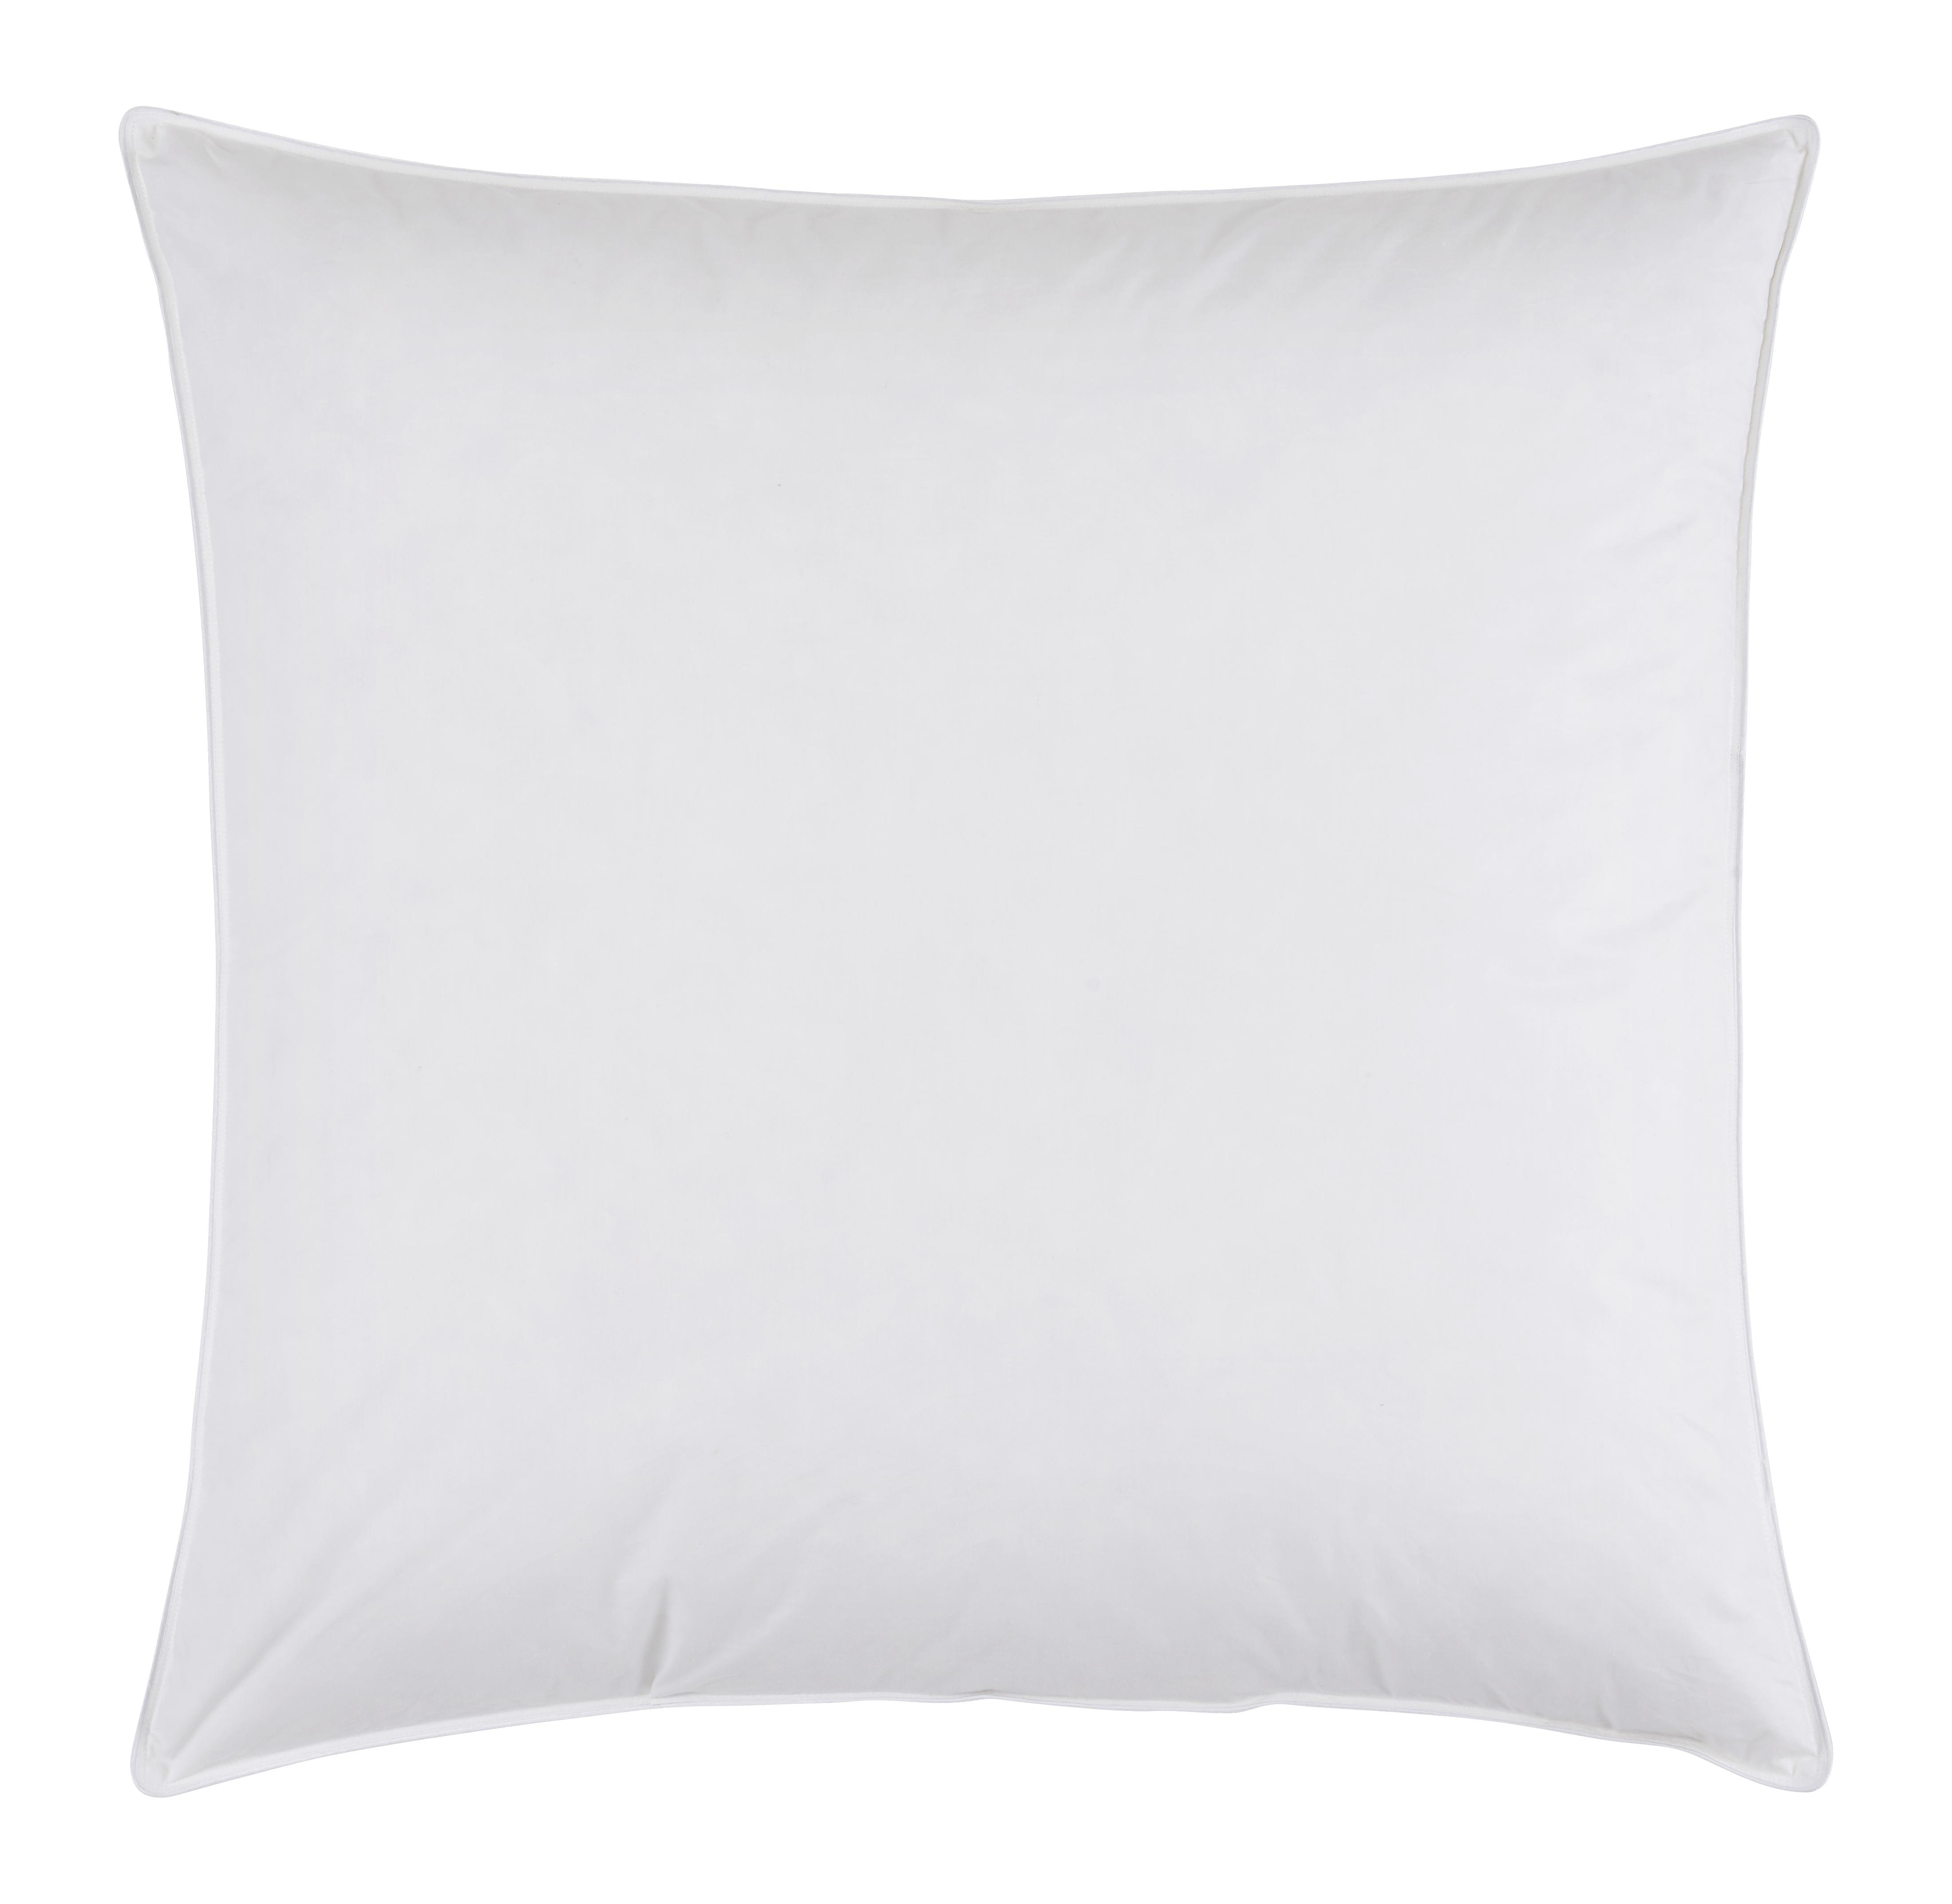 Kopfkissen Grace ca. 80x80cm - Weiß, Textil (80/80cm) - Premium Living